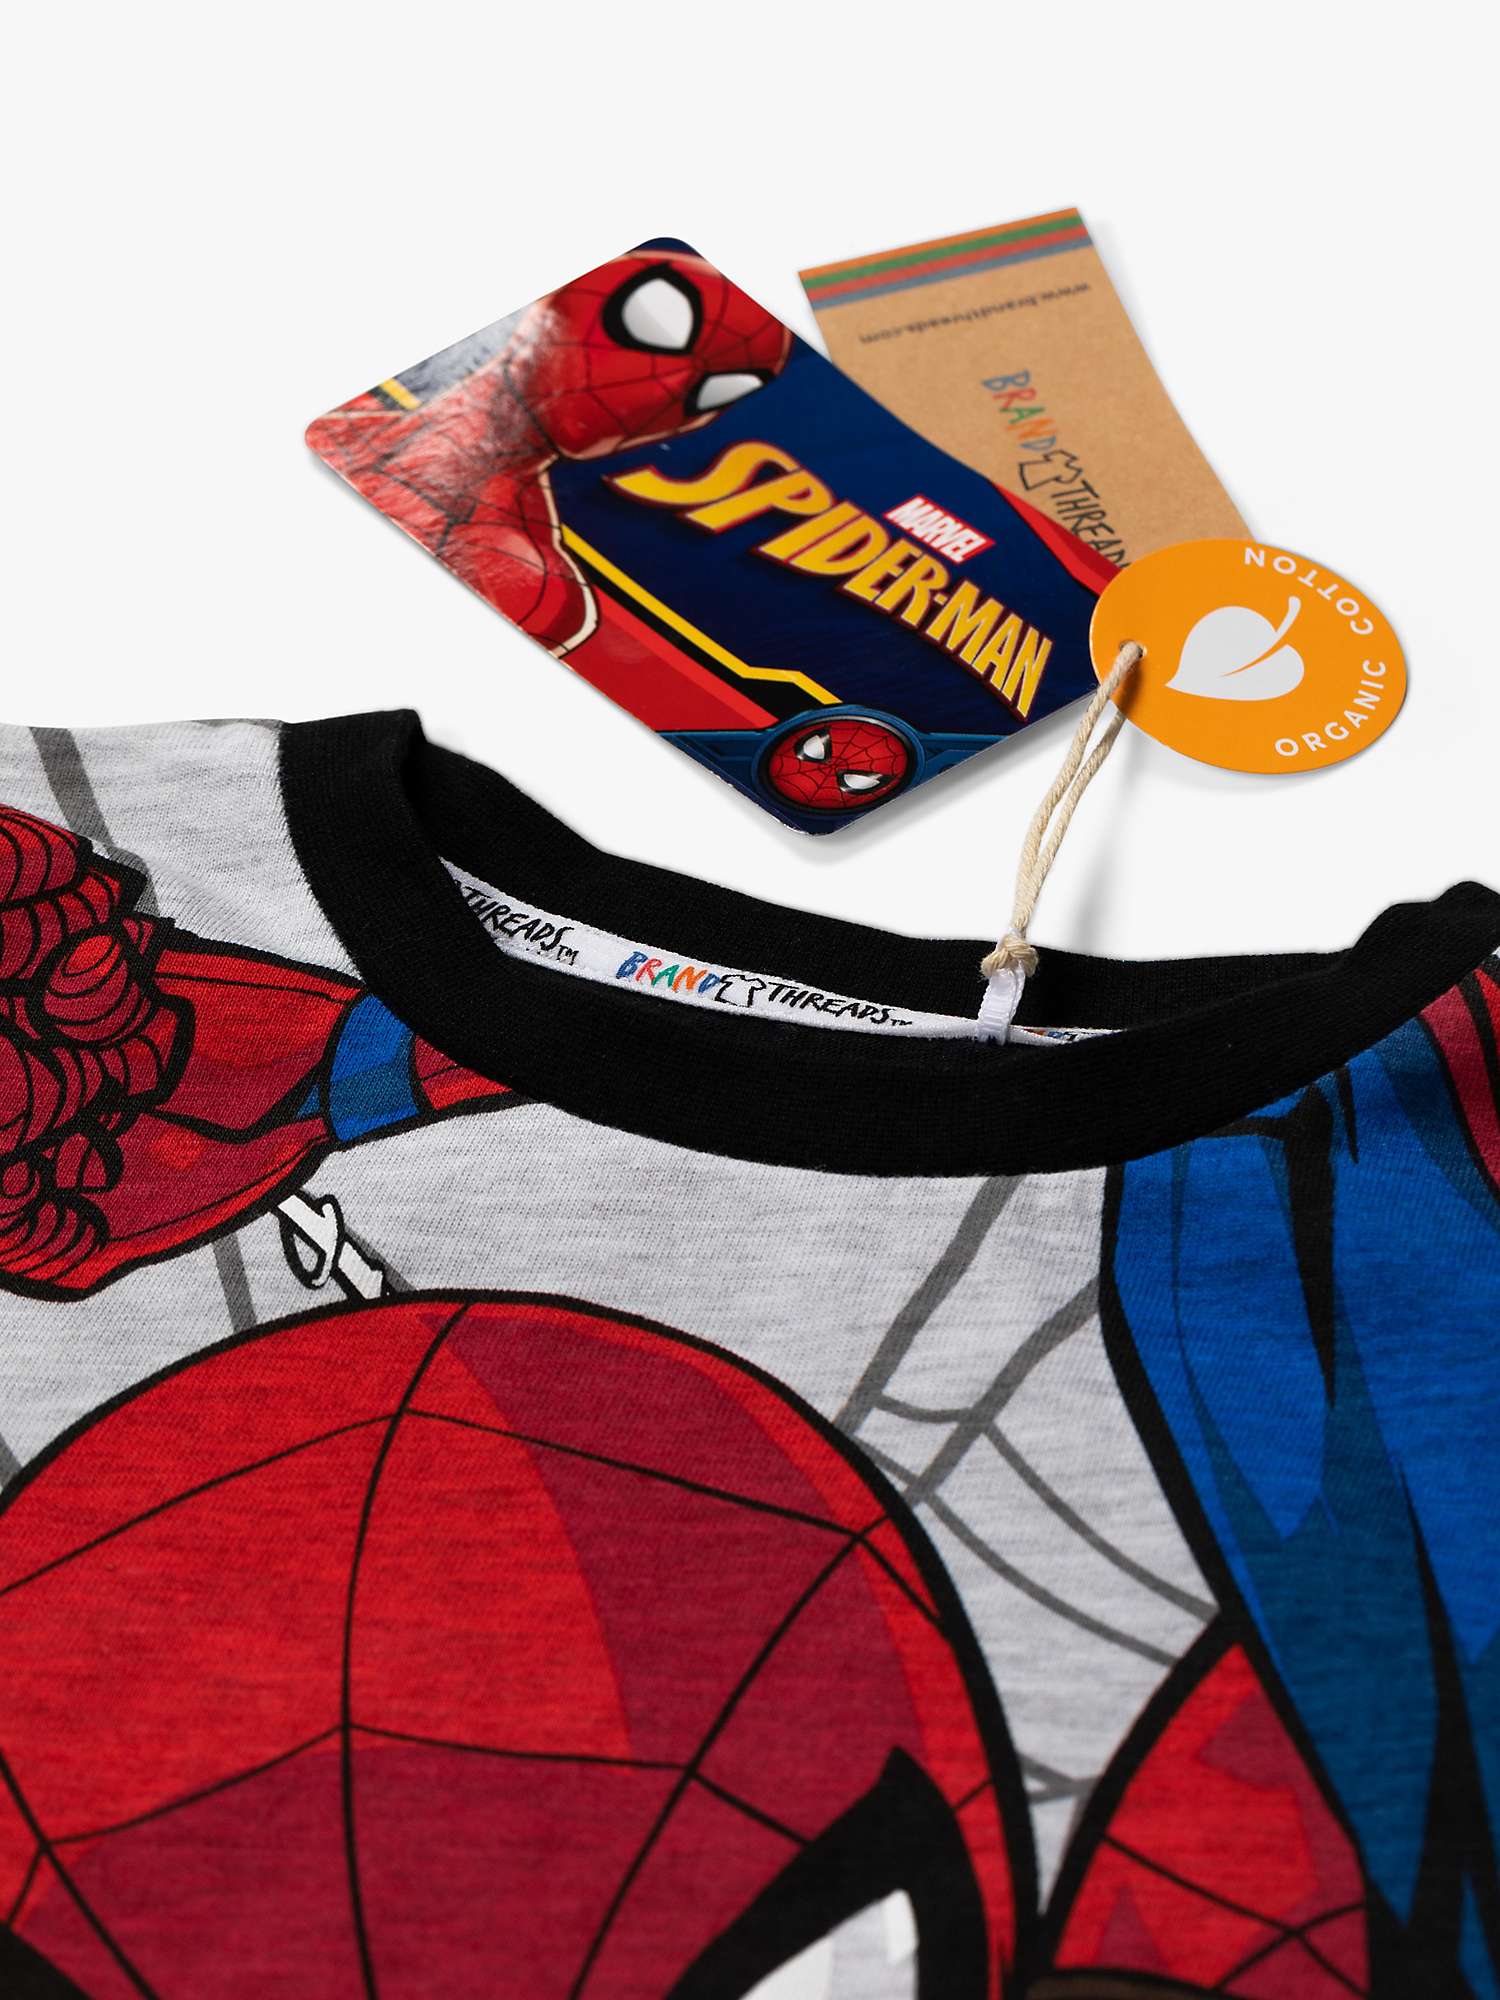 Buy Brand Threads Kids' Spiderman Pyjama Set, Black Multi Online at johnlewis.com